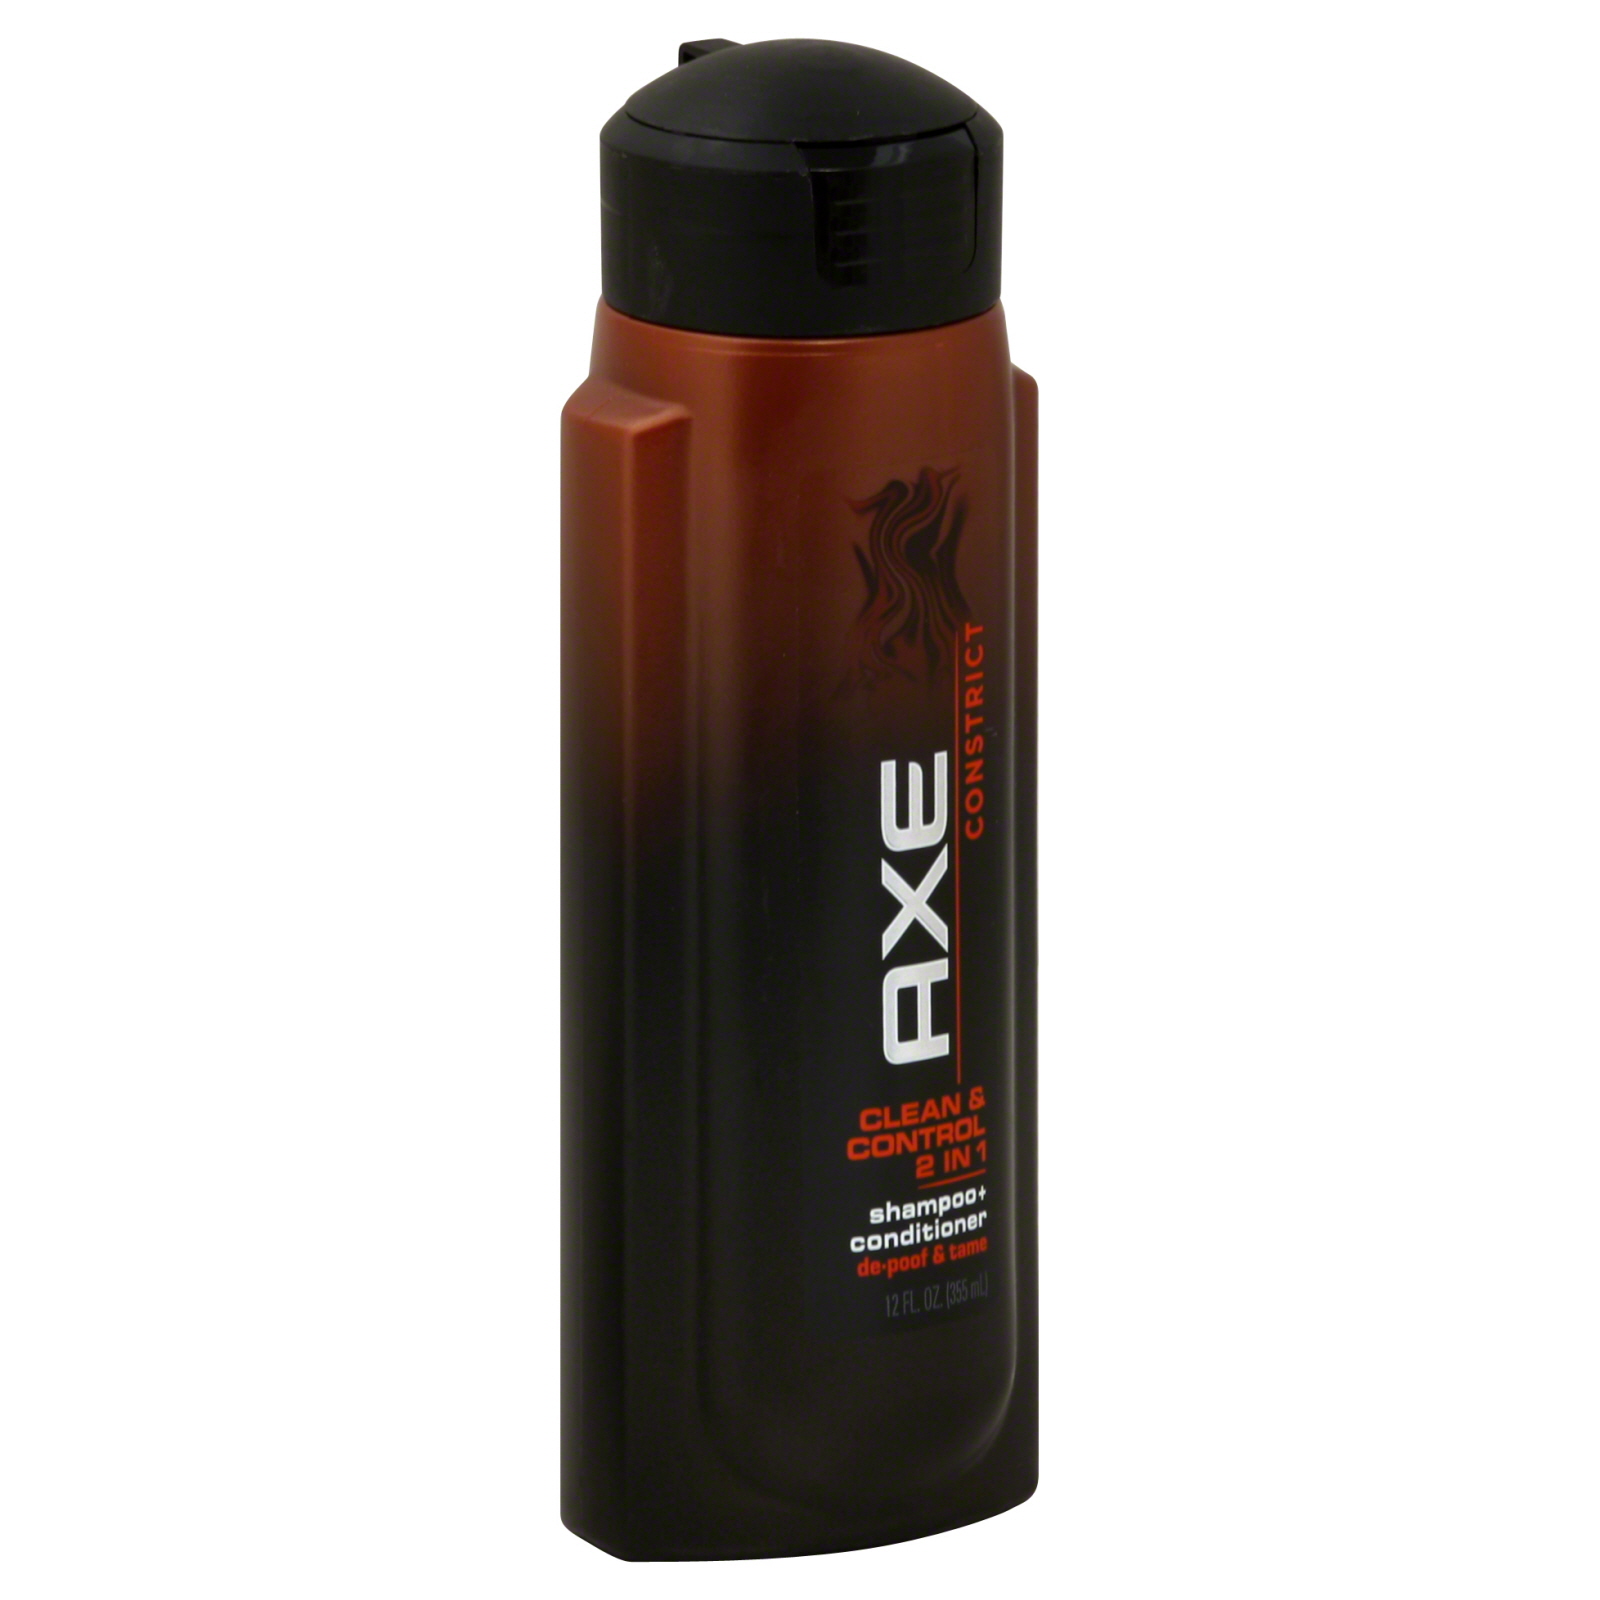 AXE Shampoo + Conditioner, Constrict, 12 fl oz (355 ml)